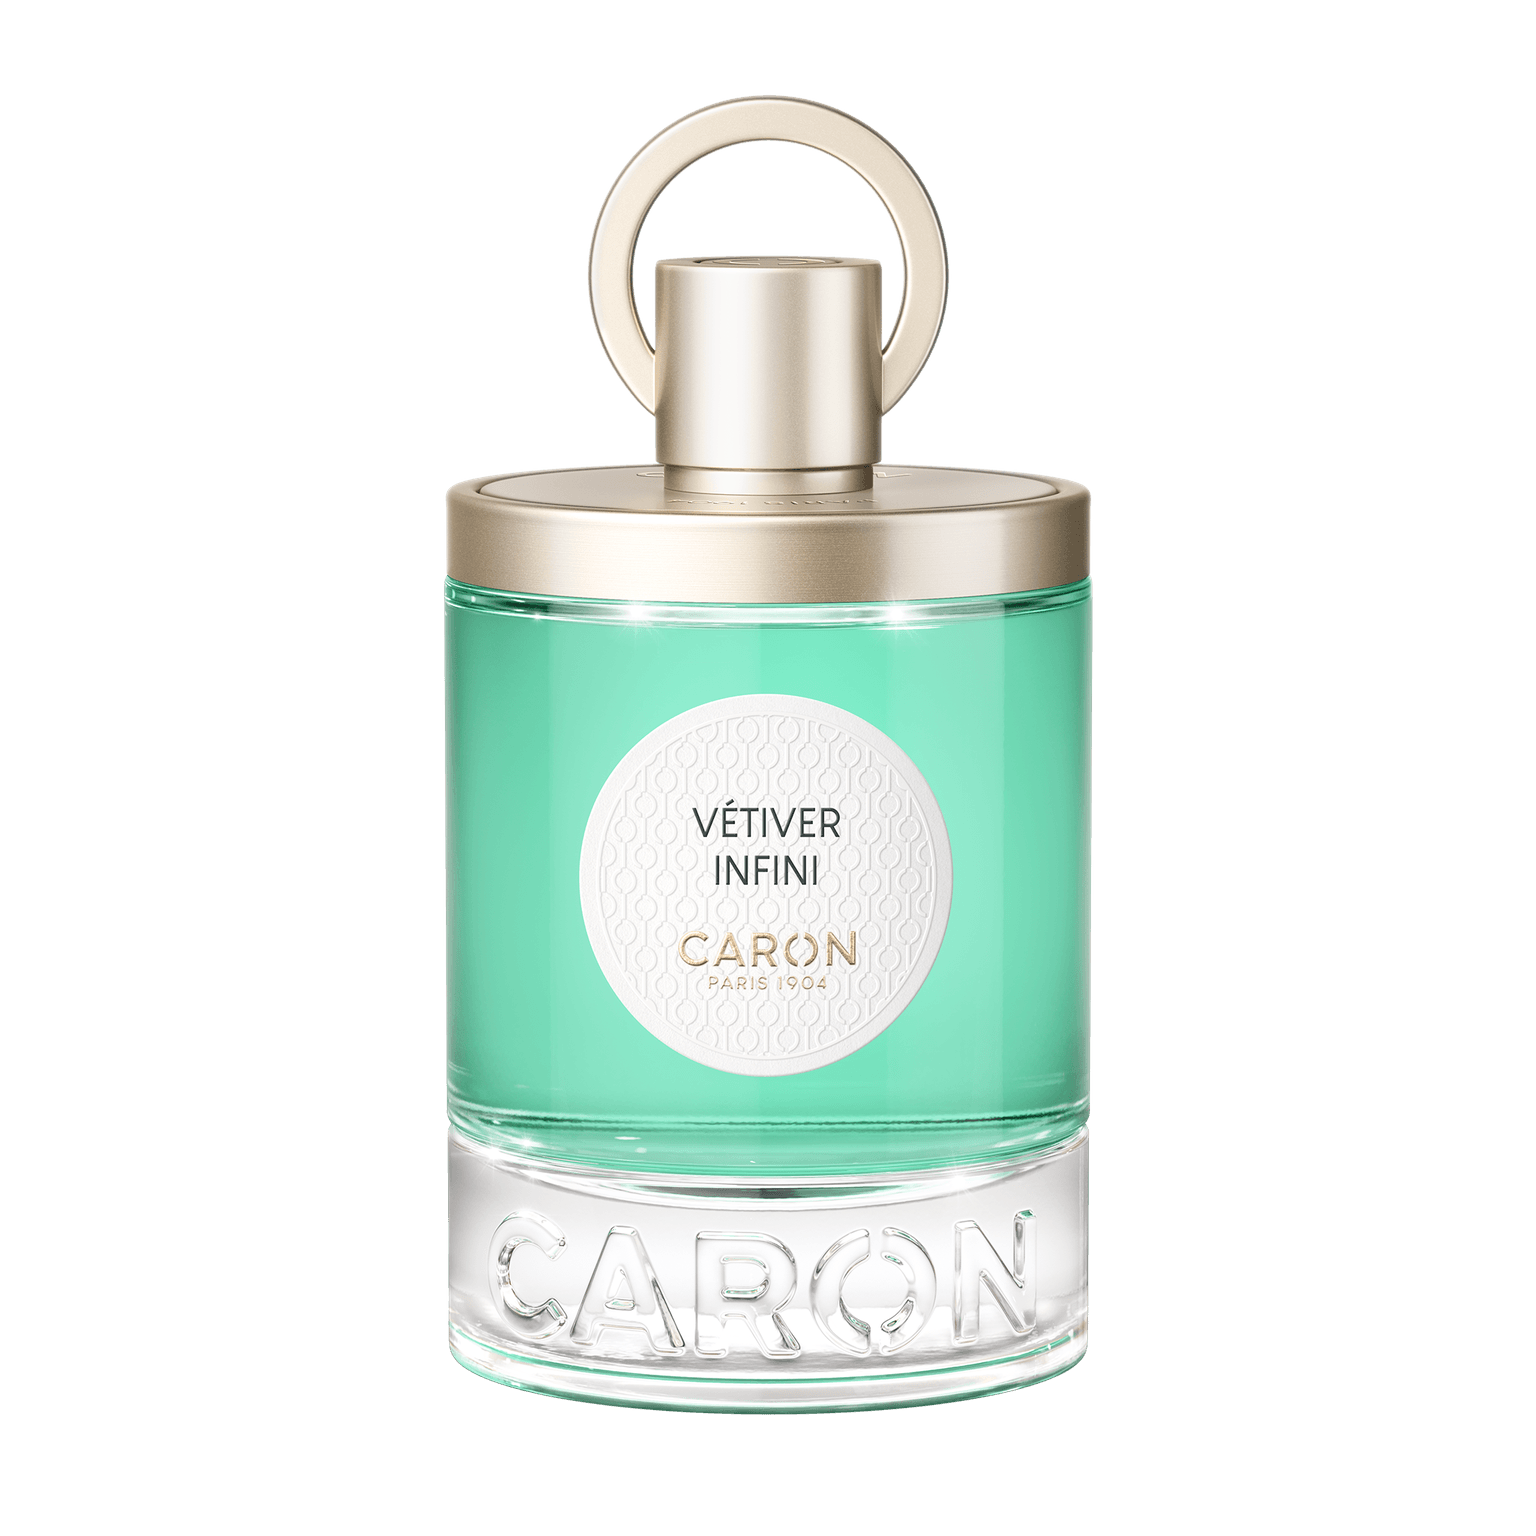 Caron Vetiver Infini 100ml | Perfume Lounge